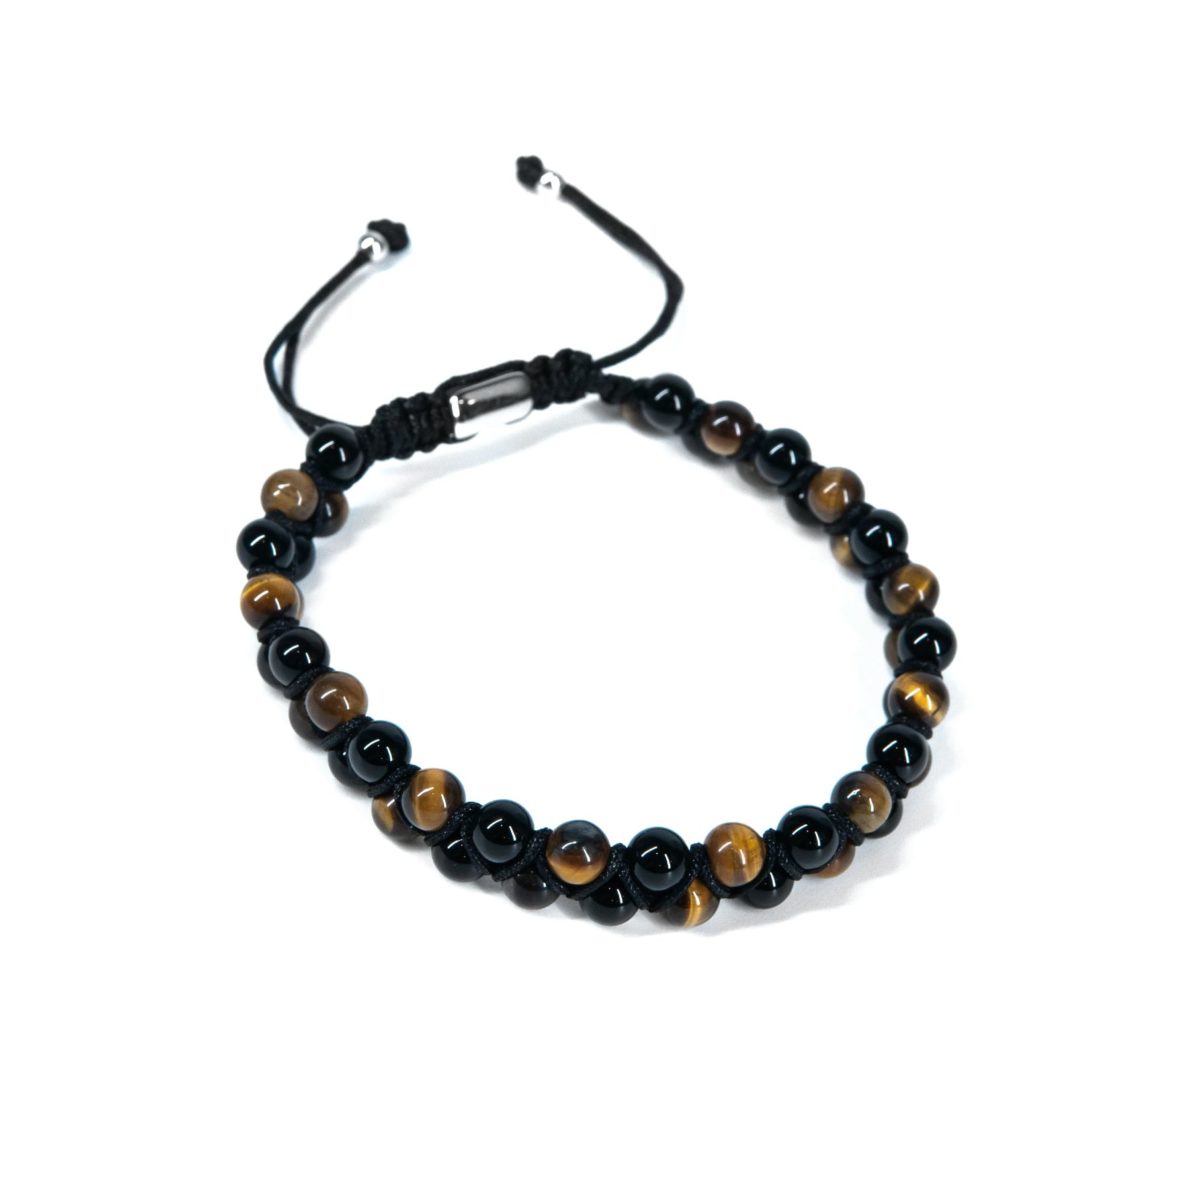 https://m.clubbella.co/product/edmund-tiger-eyes-black-onyx-bracelet/ Edmund Tiger Eye Black Onyx bracelet 5